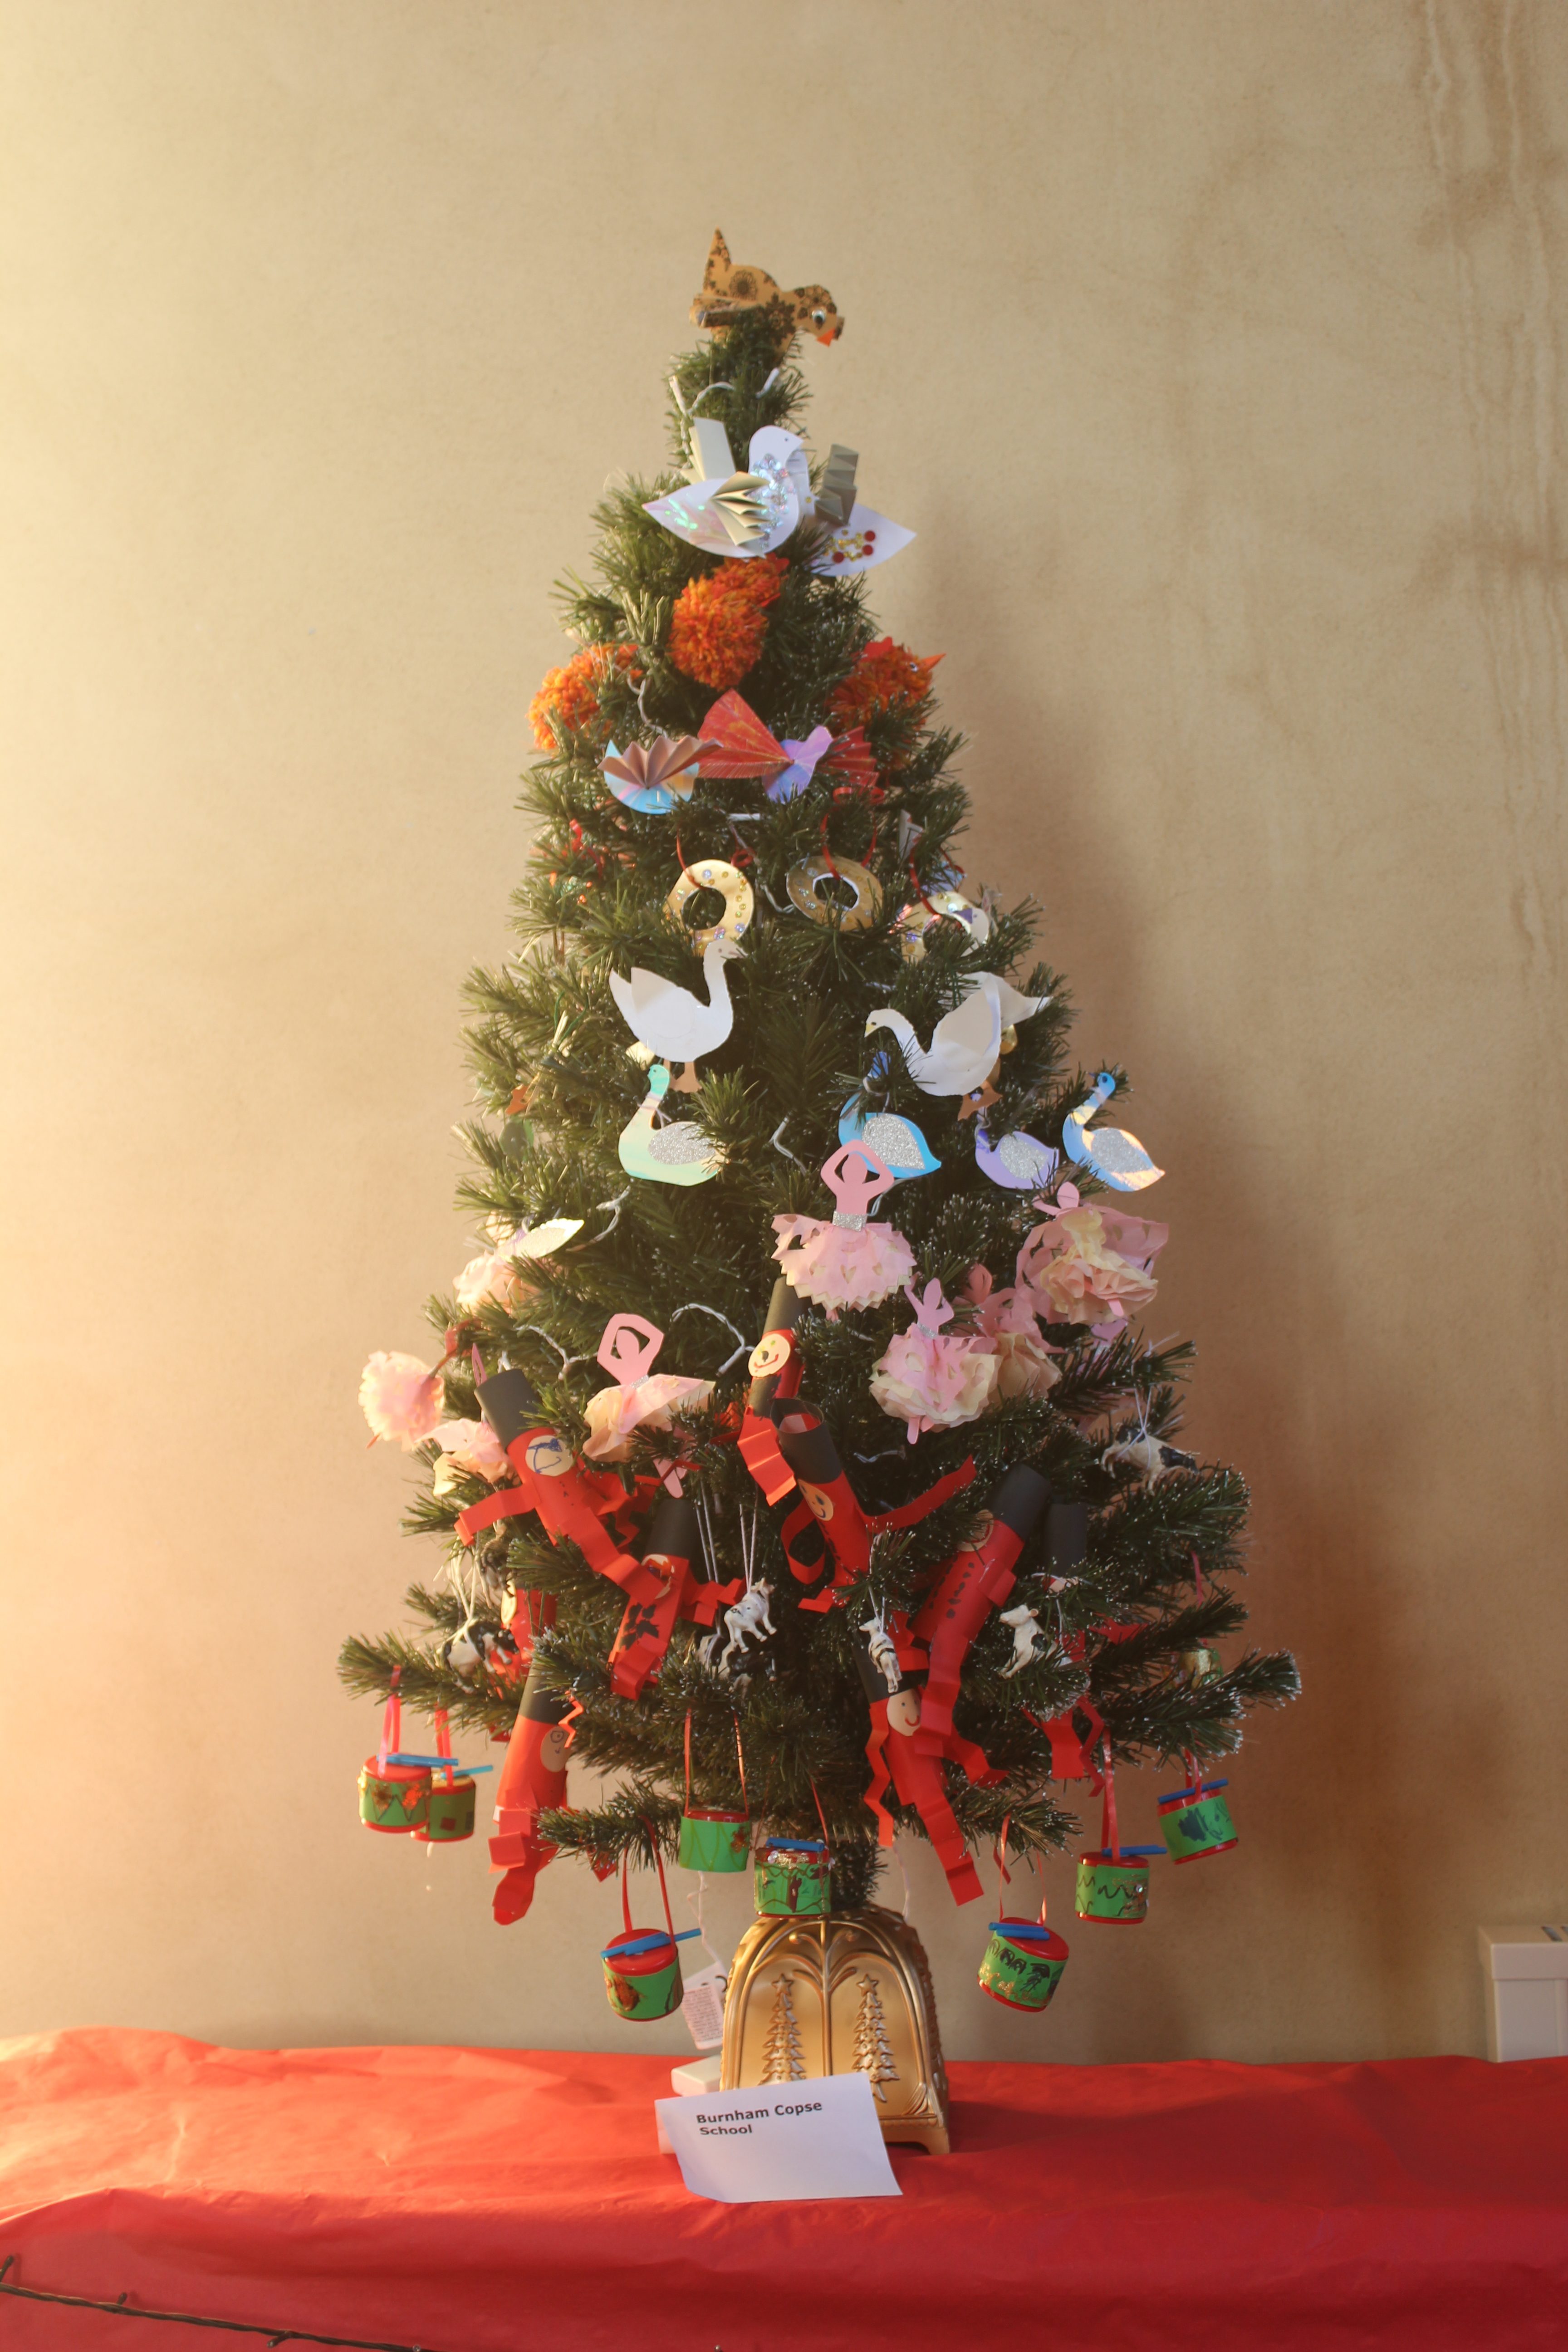 Burham Copse School Tree on Theme 12 days of Christmas